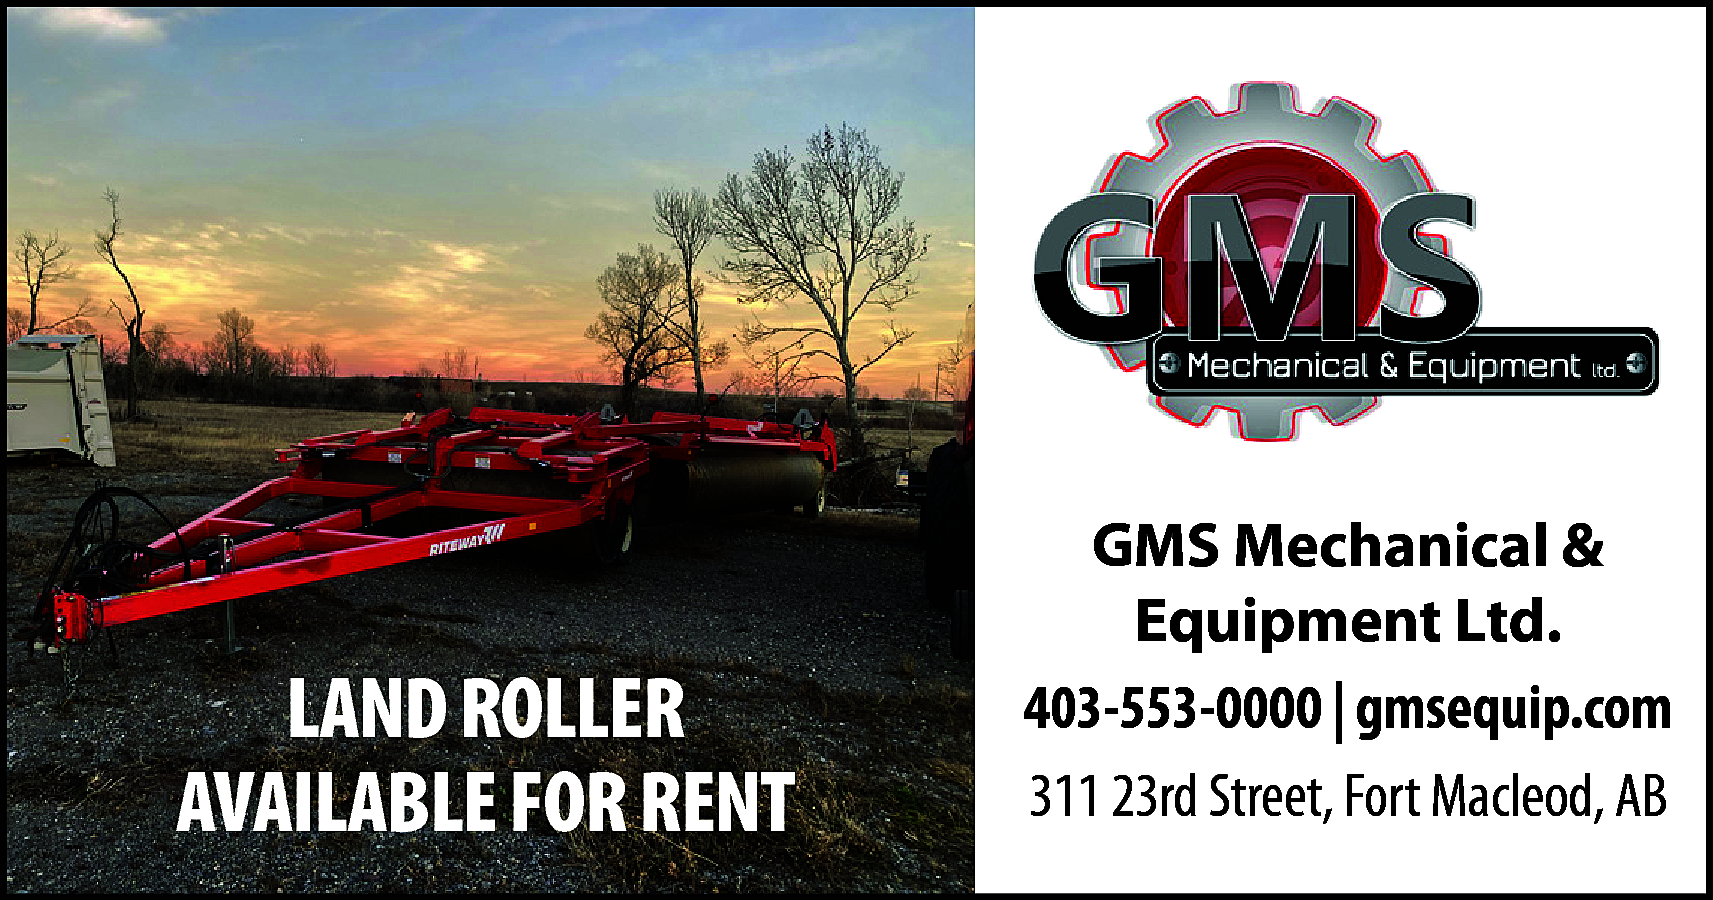 LAND ROLLER <br>AVAILABLE FOR RENT  LAND ROLLER  AVAILABLE FOR RENT    GMS Mechanical &  Equipment Ltd.  403-553-0000 | gmsequip.com  311 23rd Street, Fort Macleod, AB    